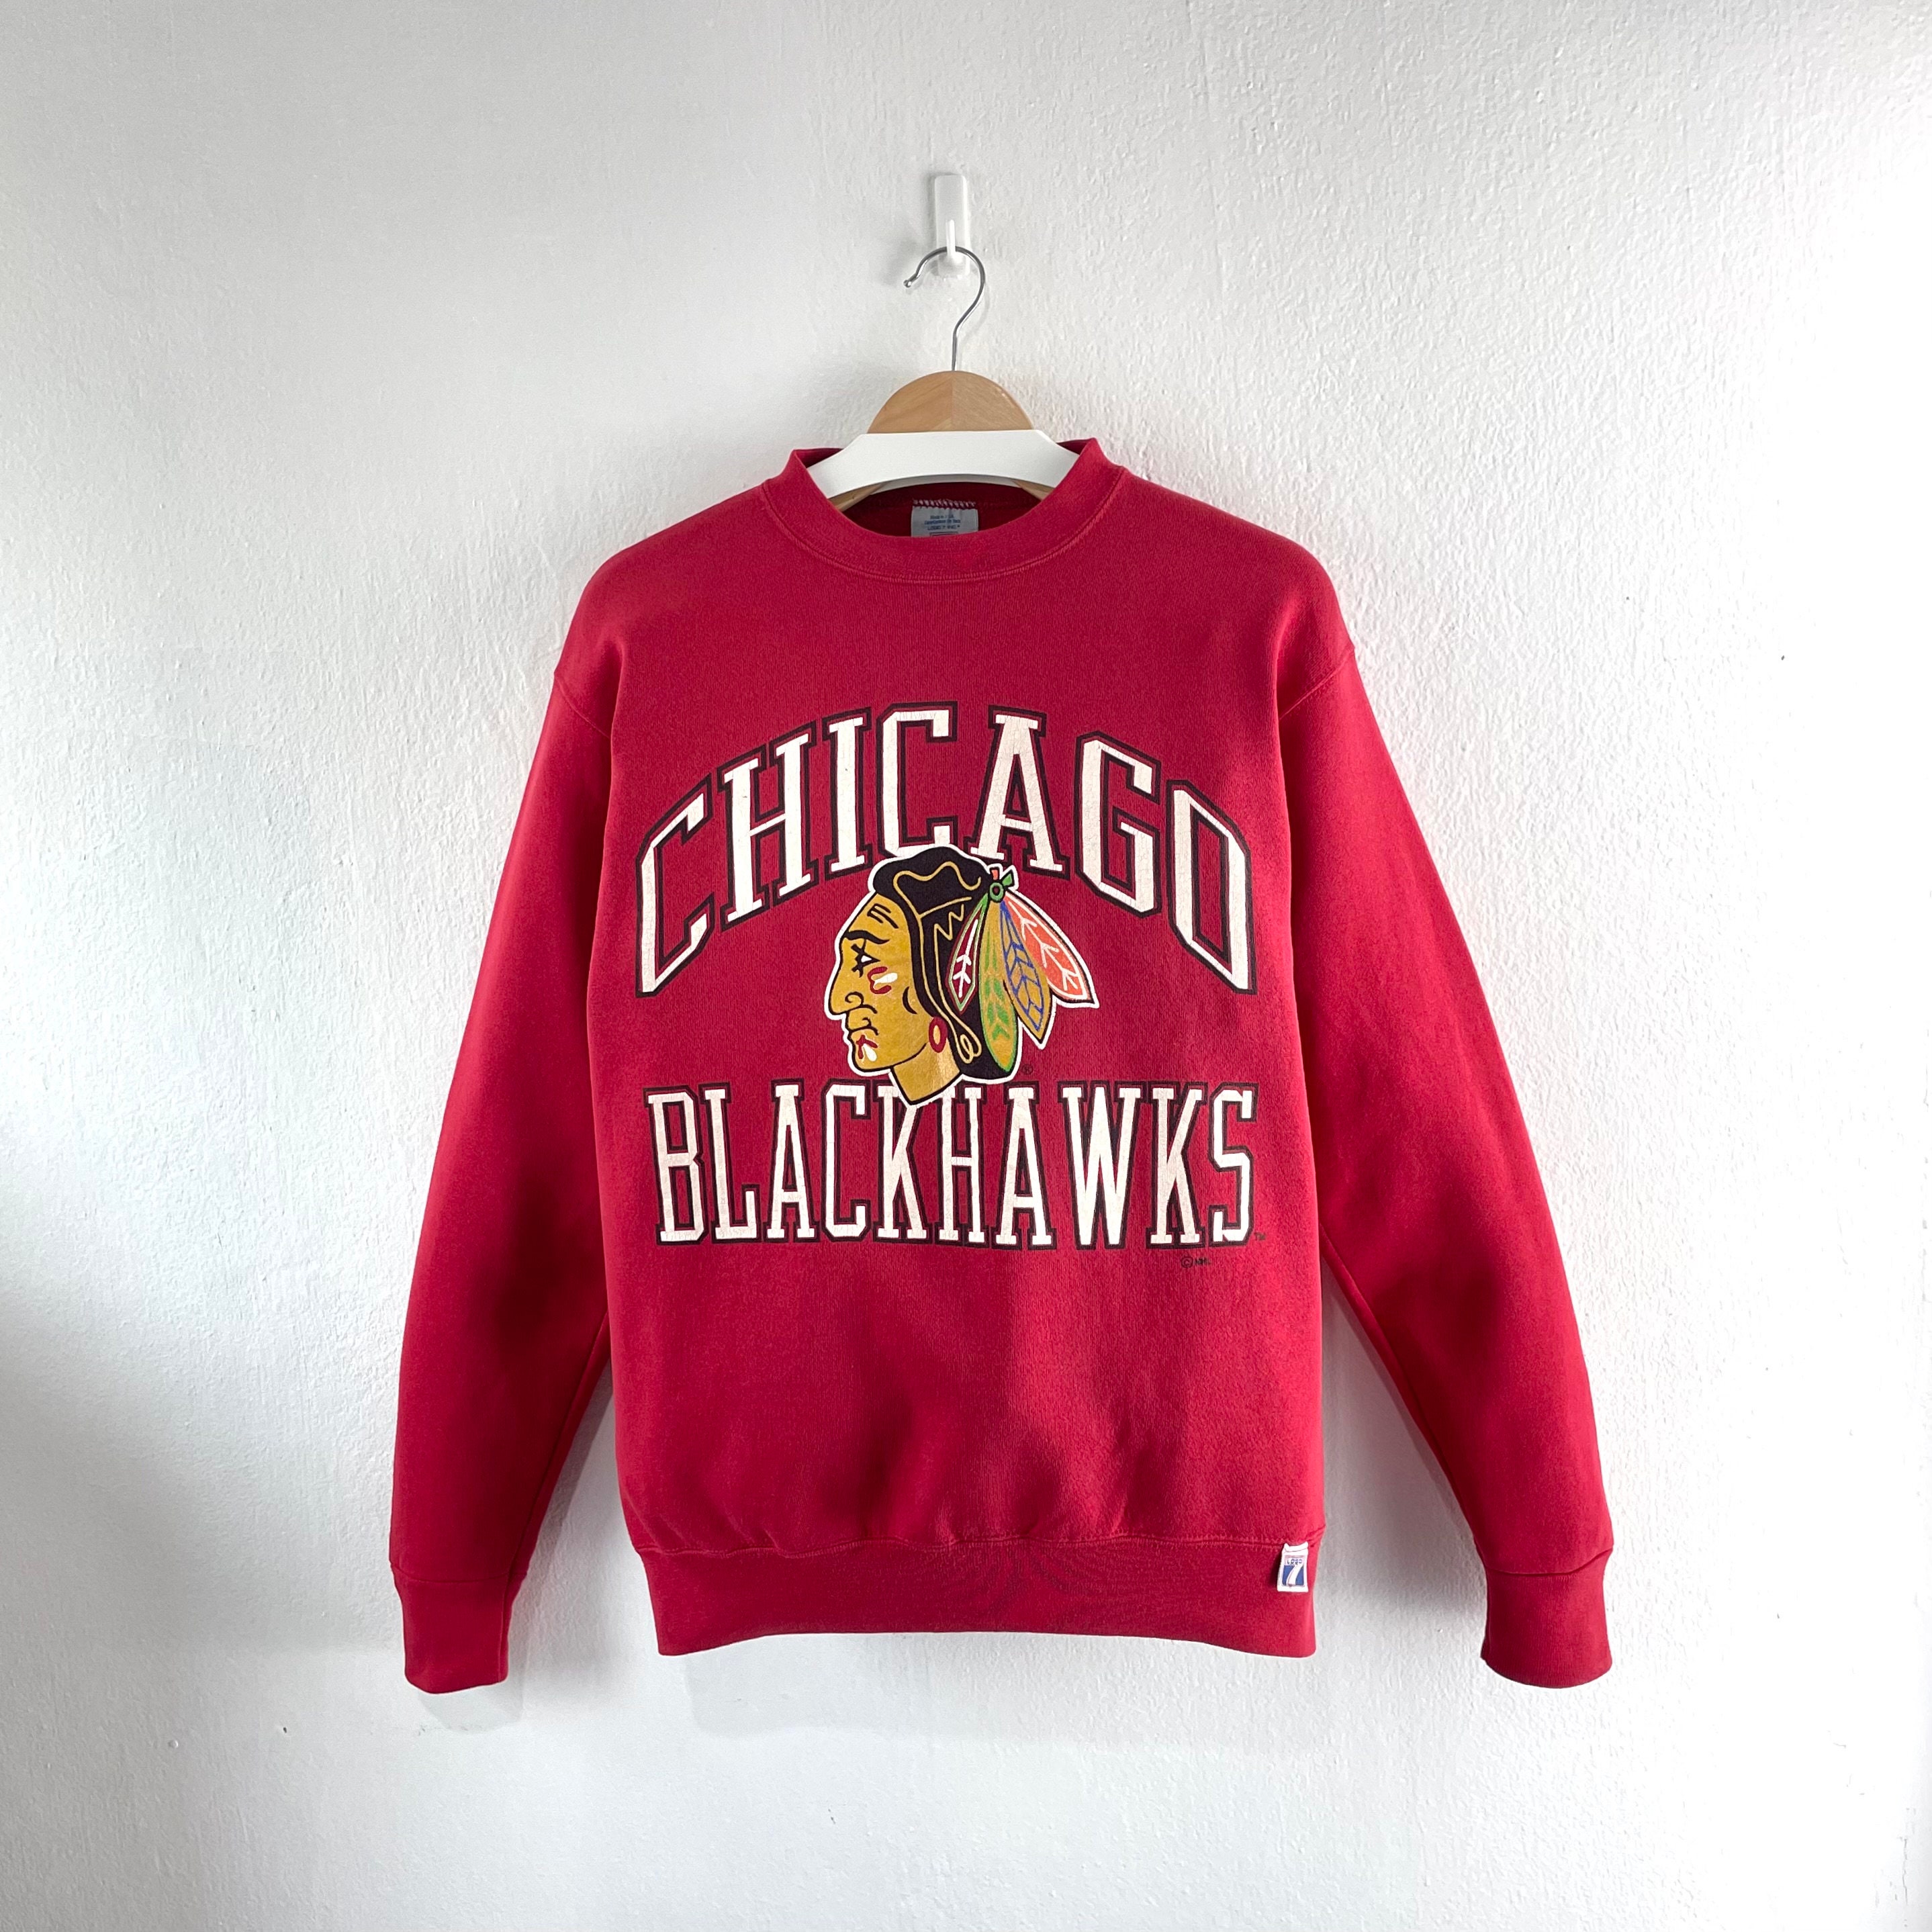 Chicago Blackhawks Original 6 Label National Hockey League retro logo shirt,  hoodie, sweater, long sleeve and tank top